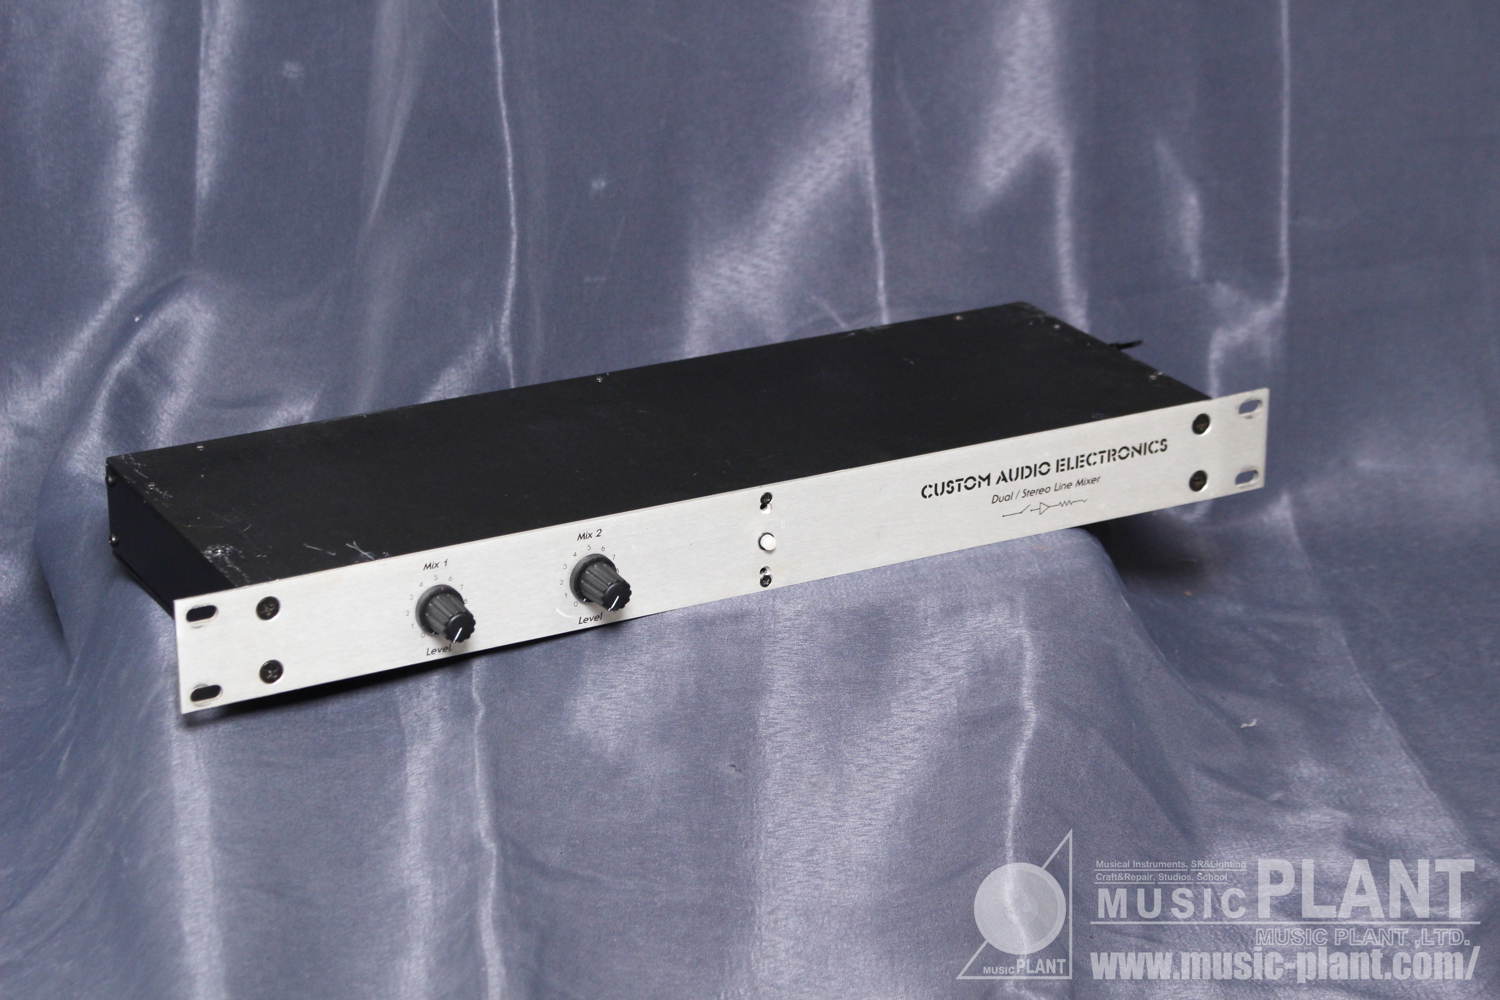 Custom Audio Electronics (CAE) デュアルステレオミキサーDual/Stereo Line  Mixer中古品()売却済みです。あしからずご了承ください。 MUSIC PLANT WEBSHOP